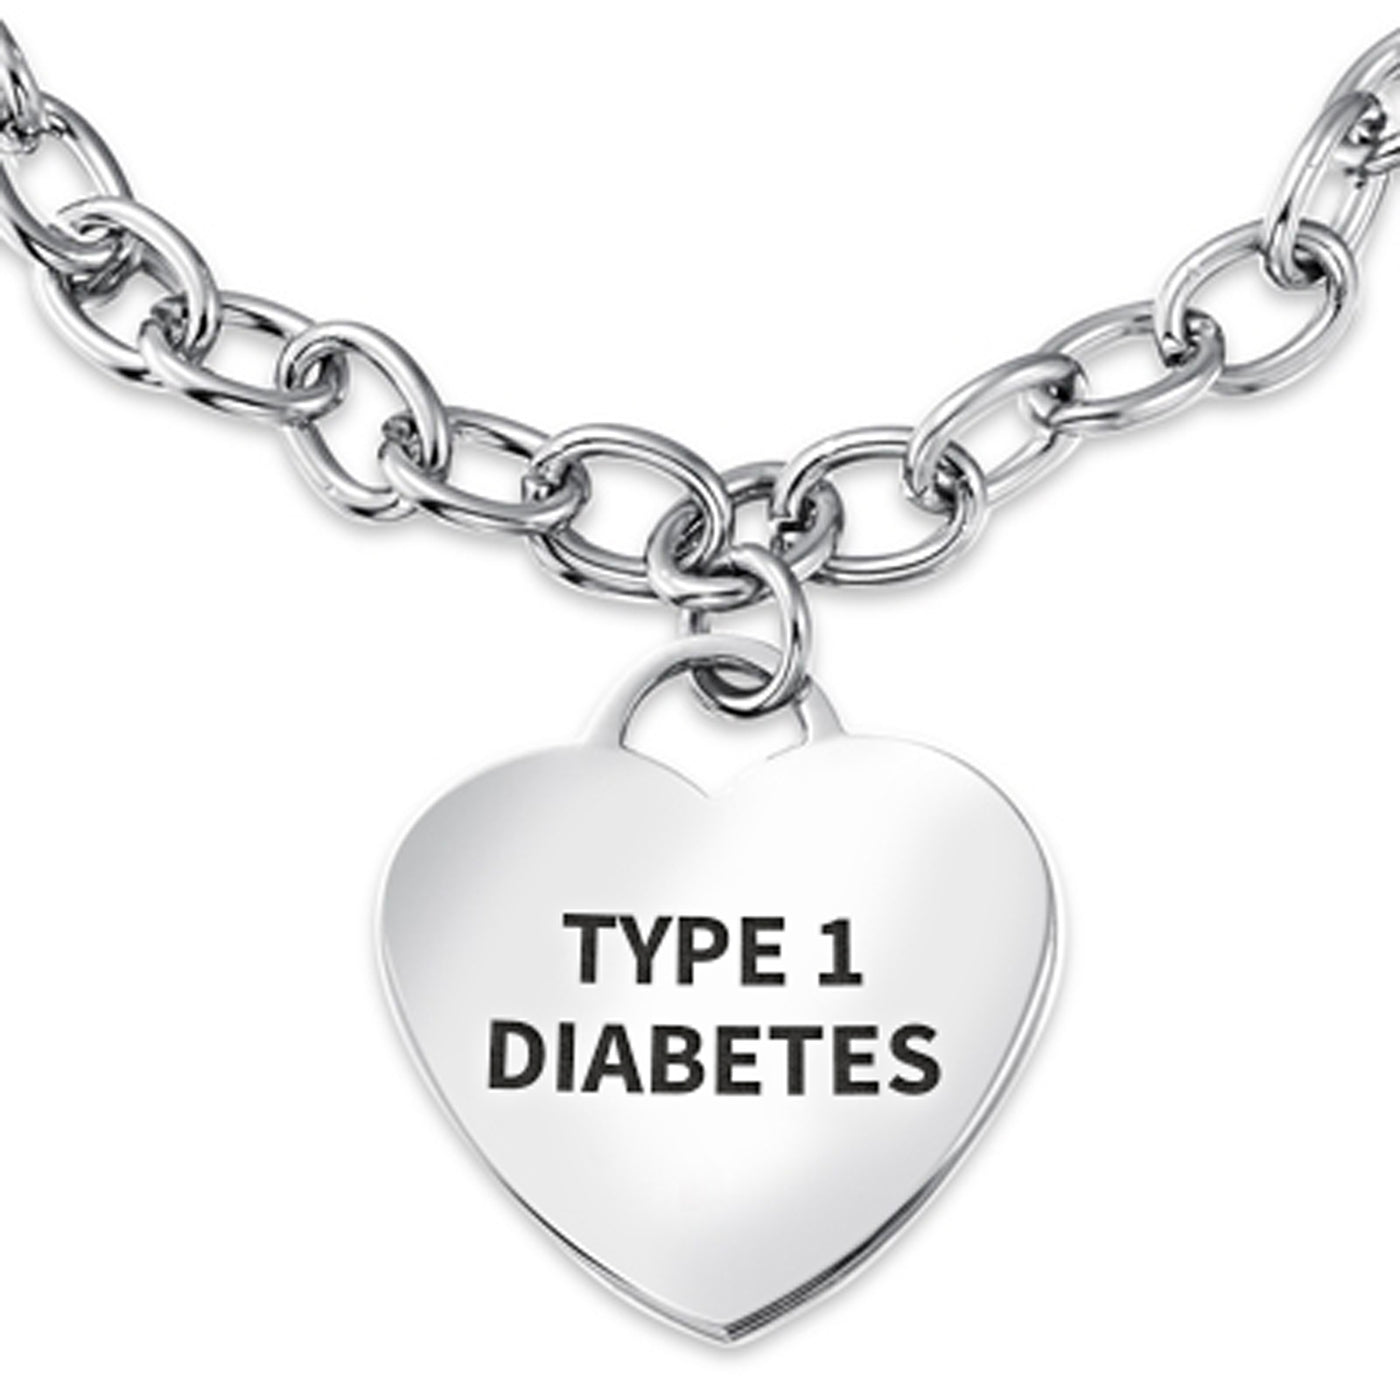 Type 1 diabetes | Image1